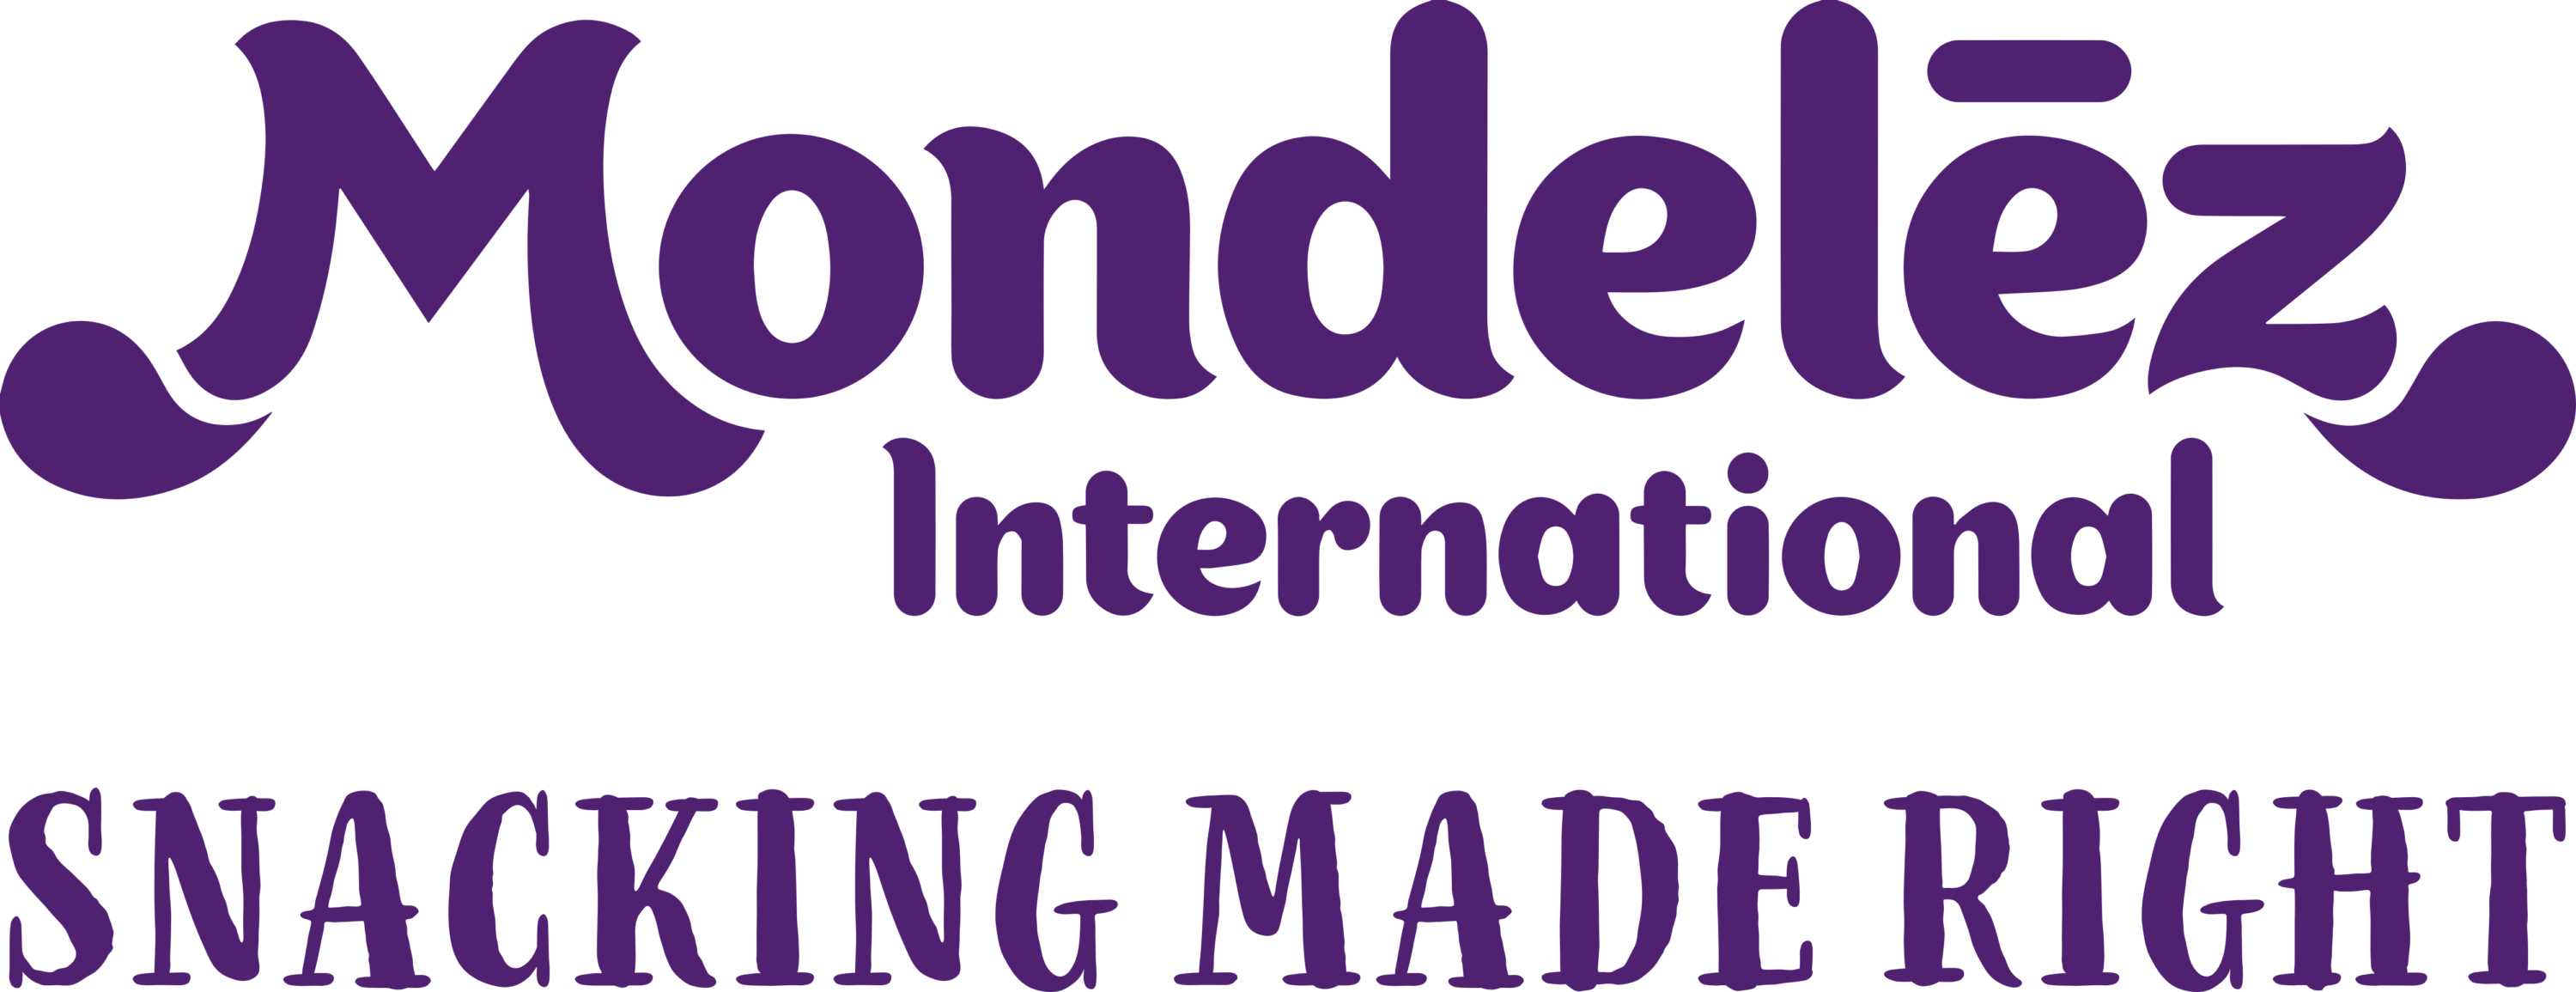 Mondelēz International Logo 2018